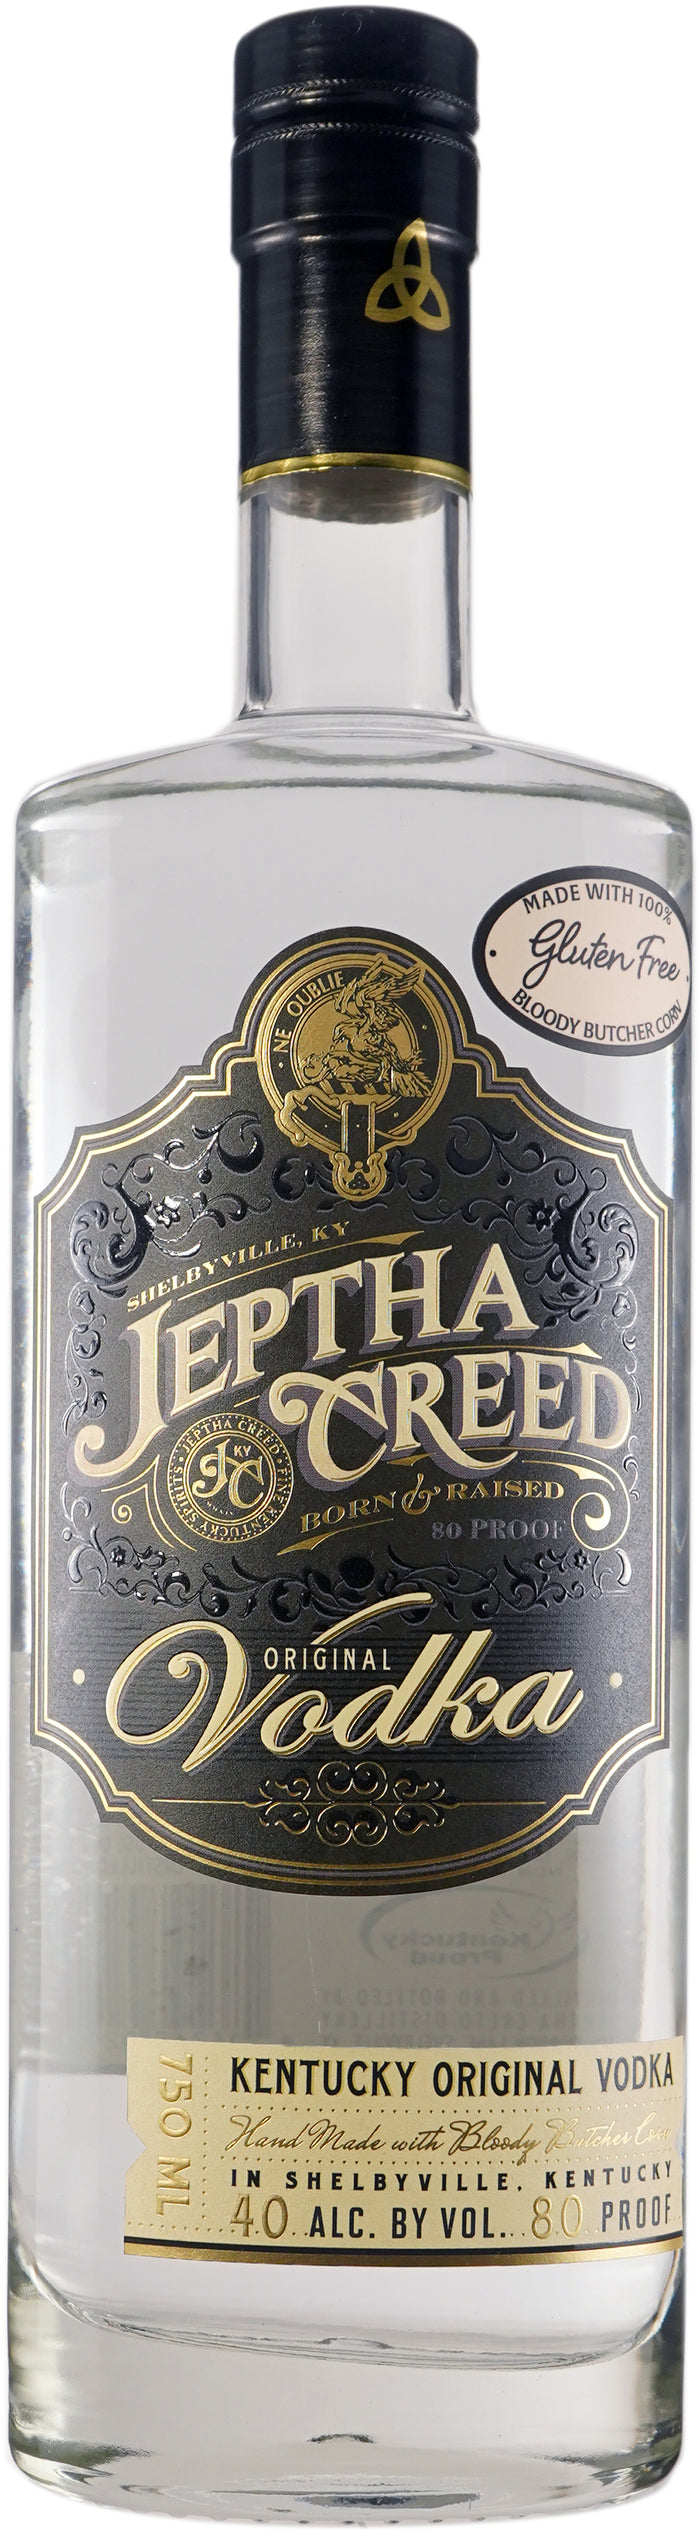 Jeptha Creed Original Vodka